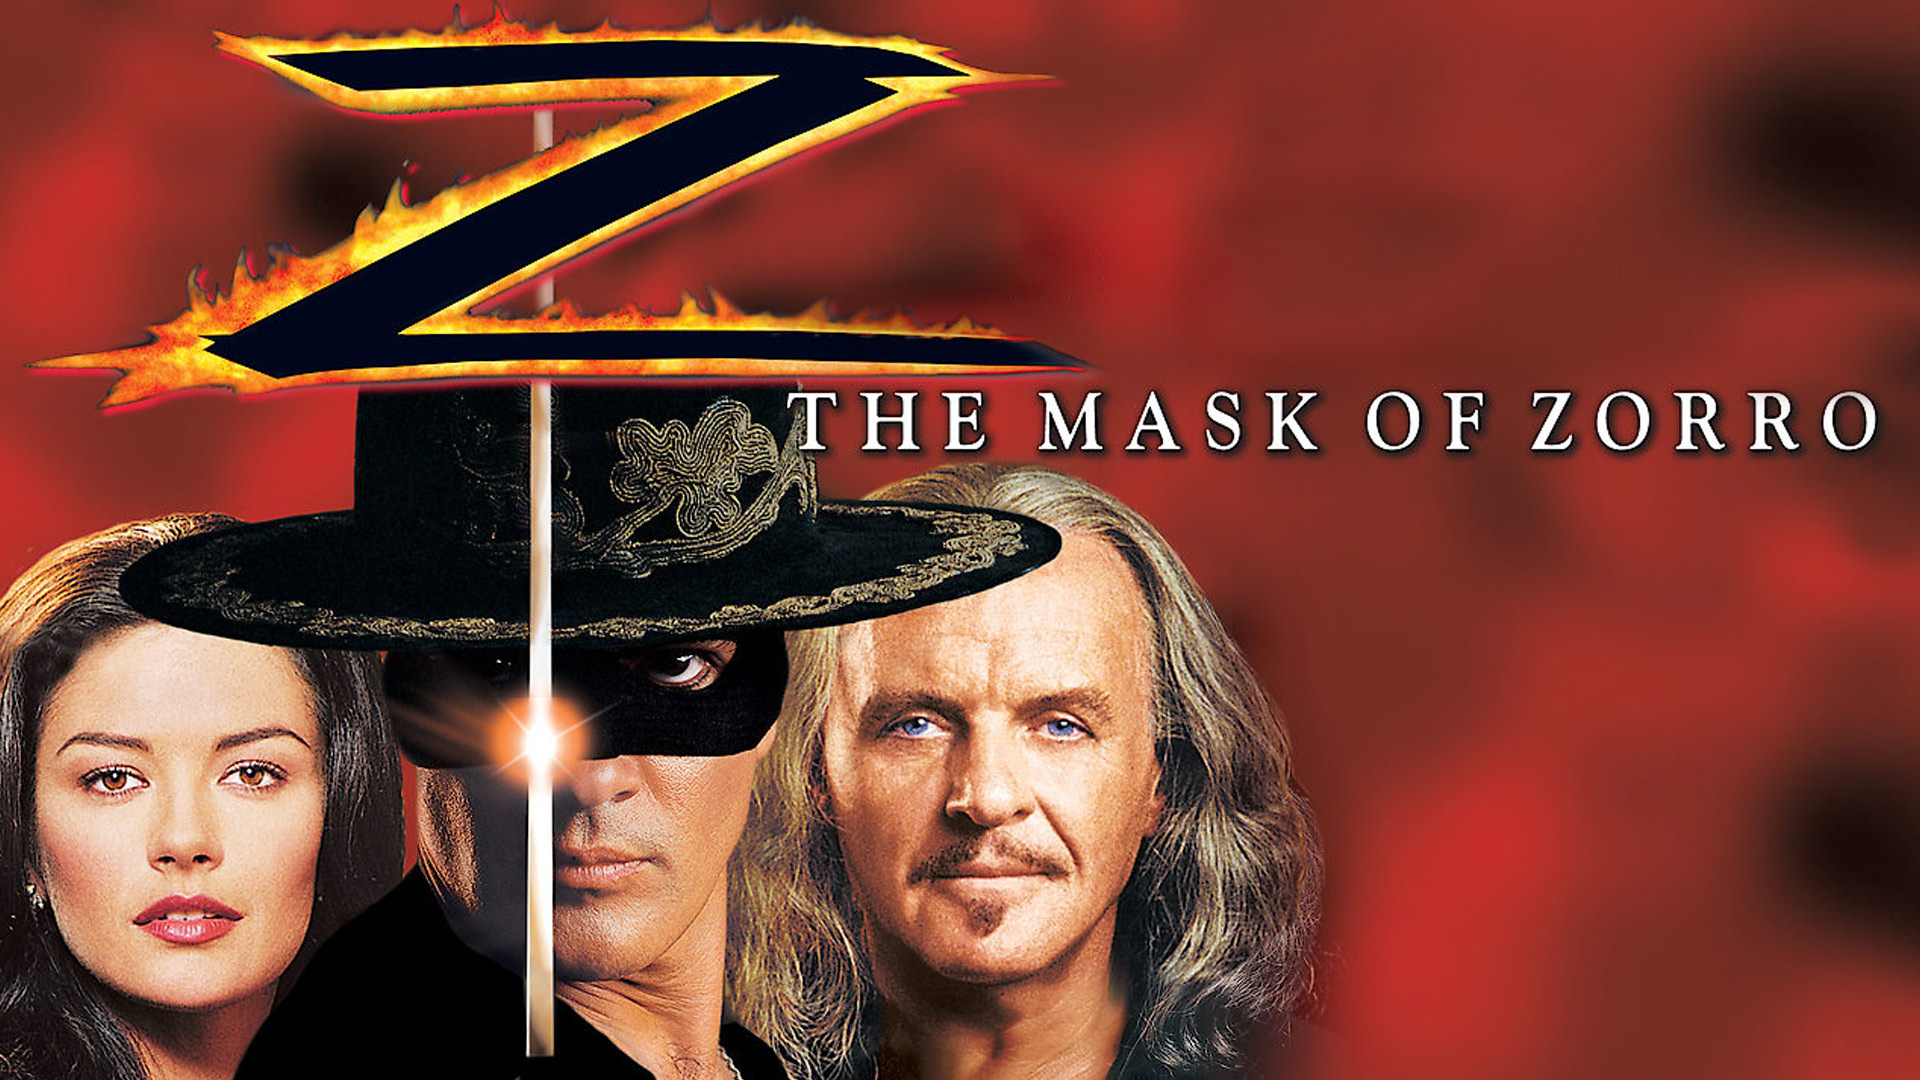 Zorro mask, Movie wallpaper, Background image, Legend of Zorro, 1920x1080 Full HD Desktop